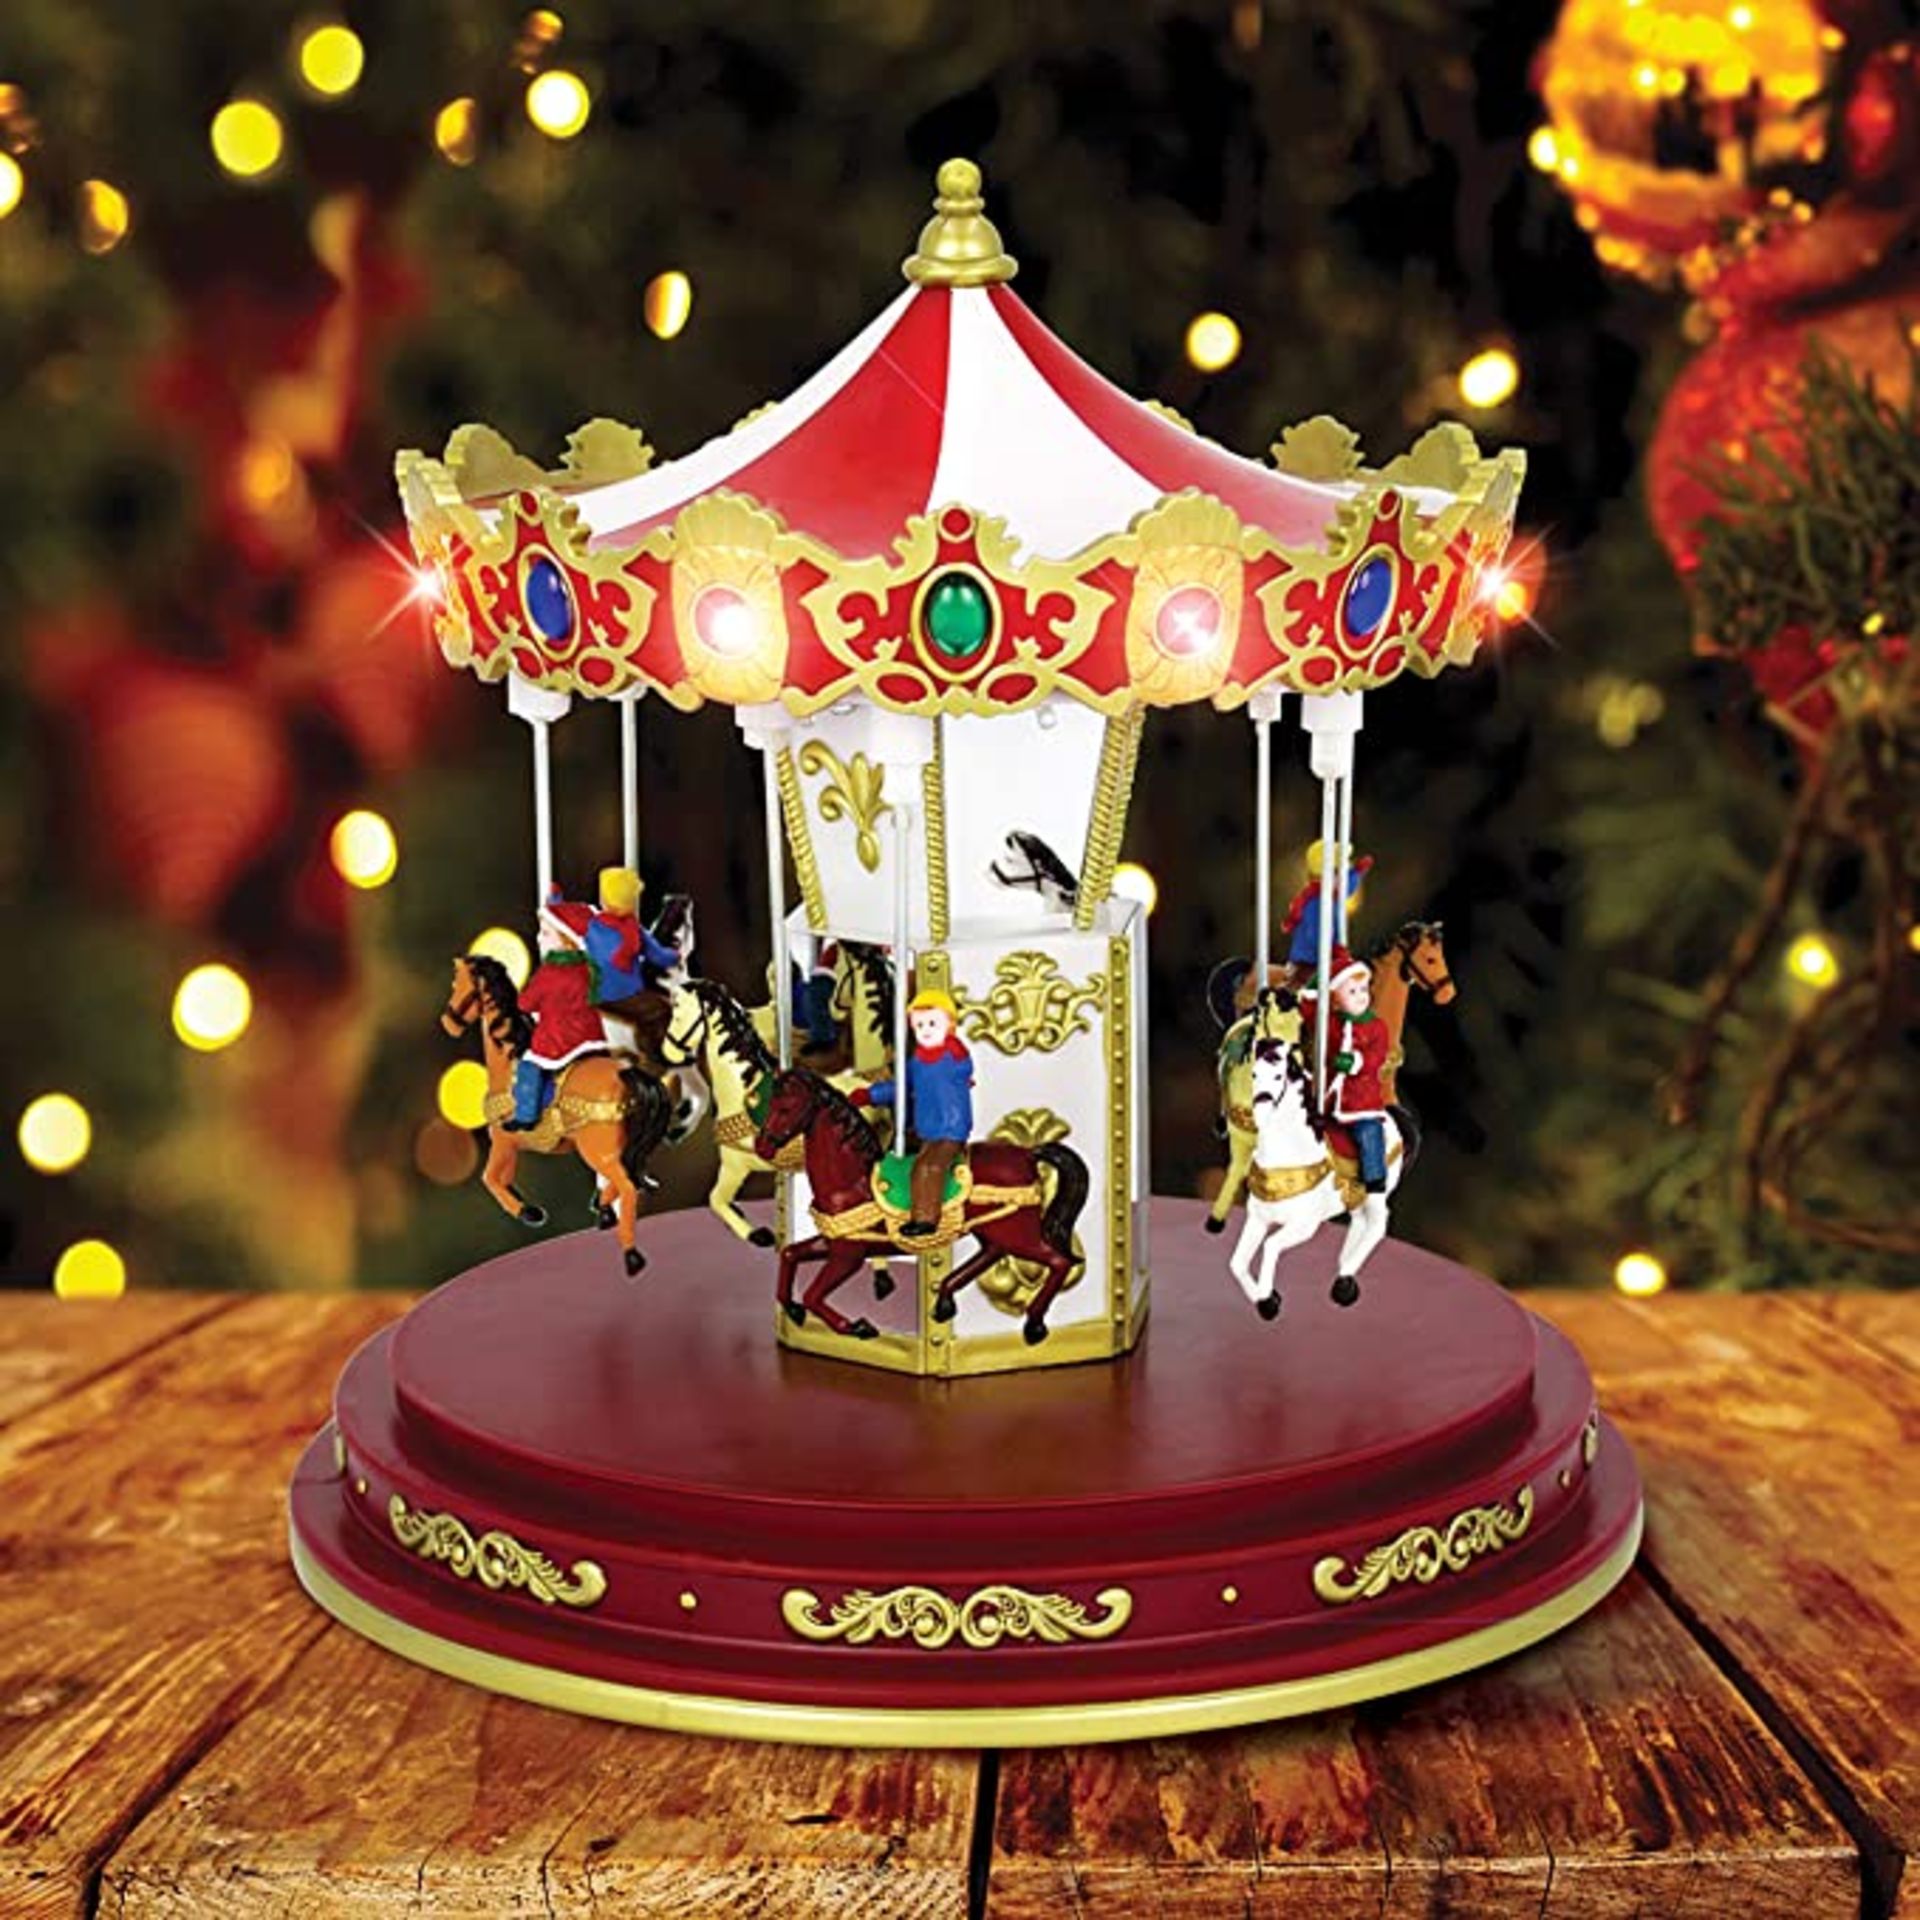 The Christmas Workshop 82790 Revolving Musical Carousel / Light Up Christmas Decoration / 14 x